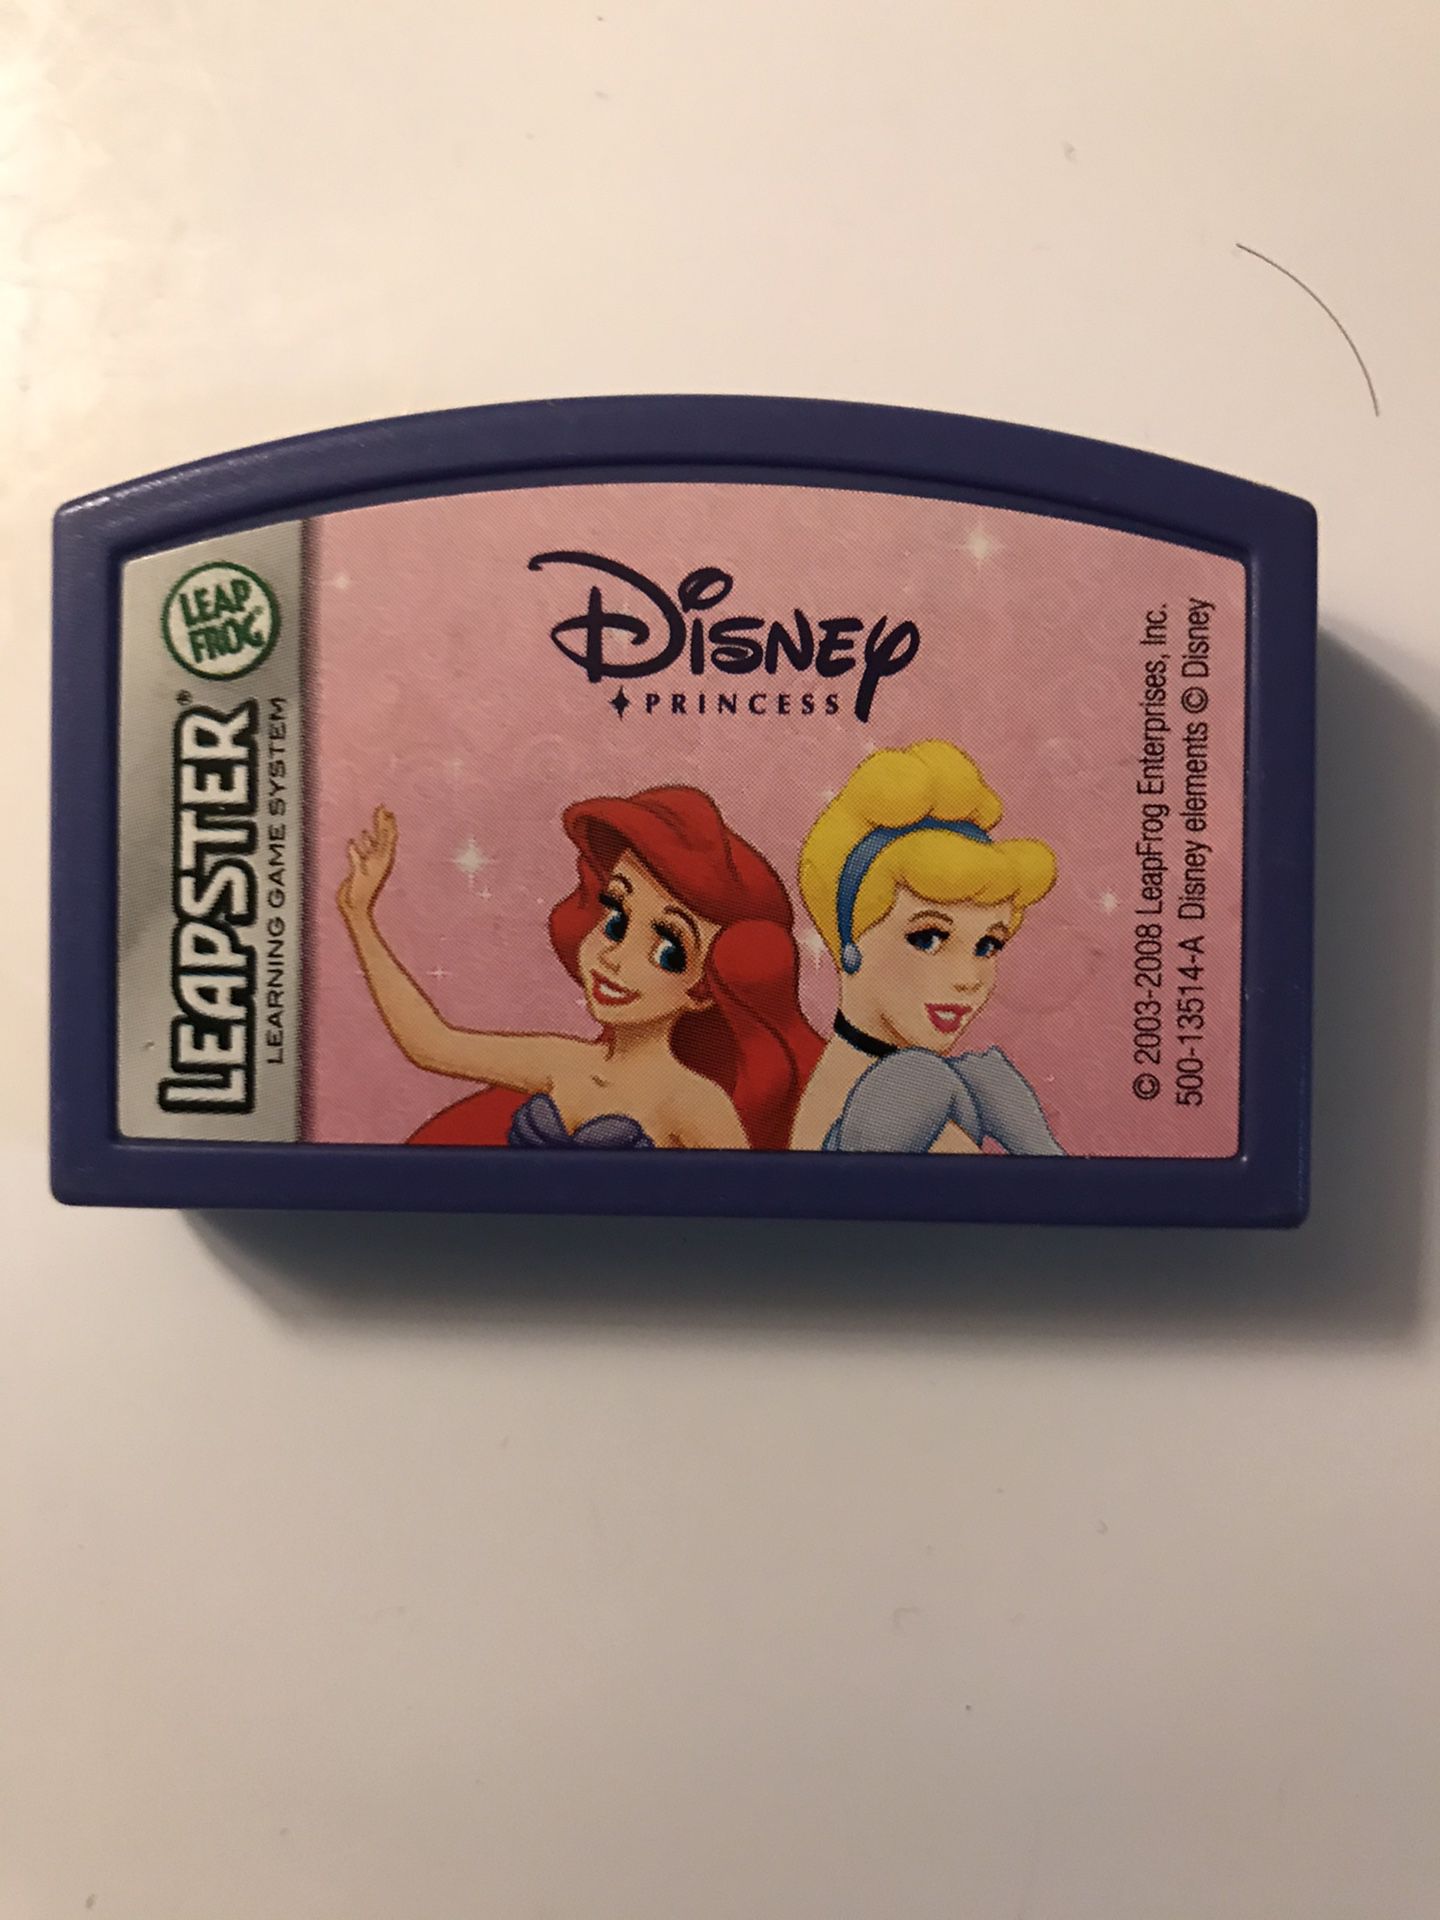 Leapfrog leapster Disney princess game cartridge